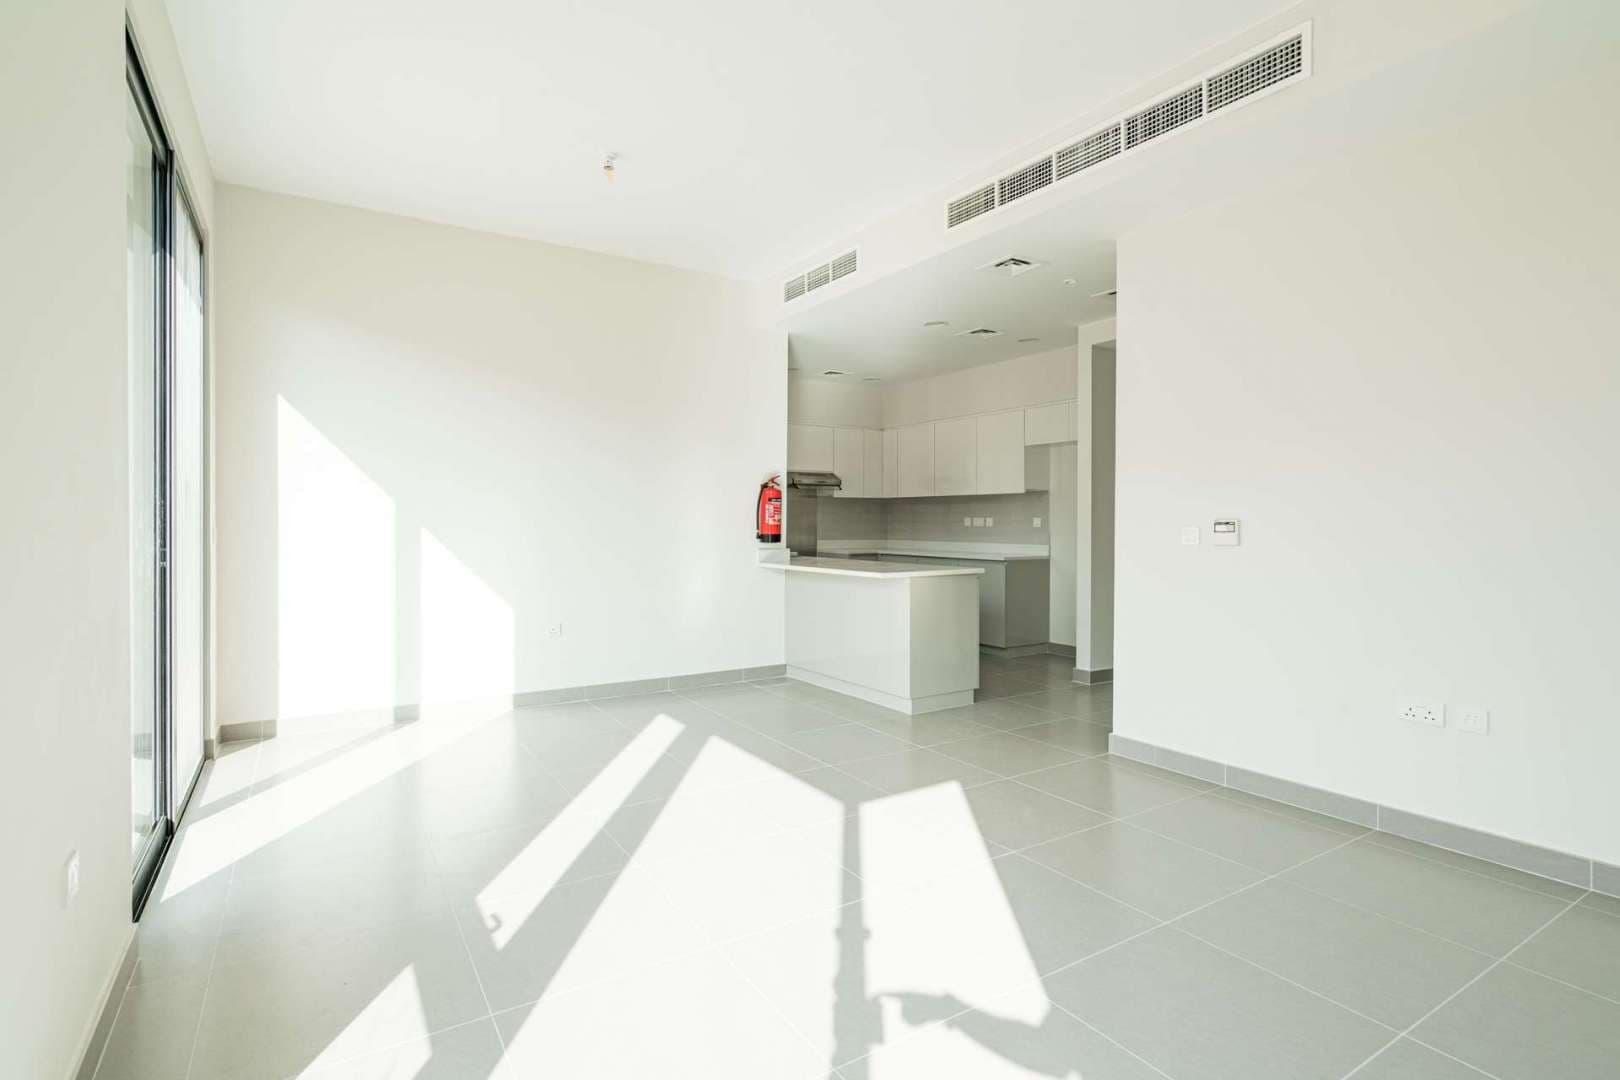 4 Bedroom Townhouse For Sale Maple At Dubai Hills Estate Lp06817 10b1b5cbd029f000.jpg